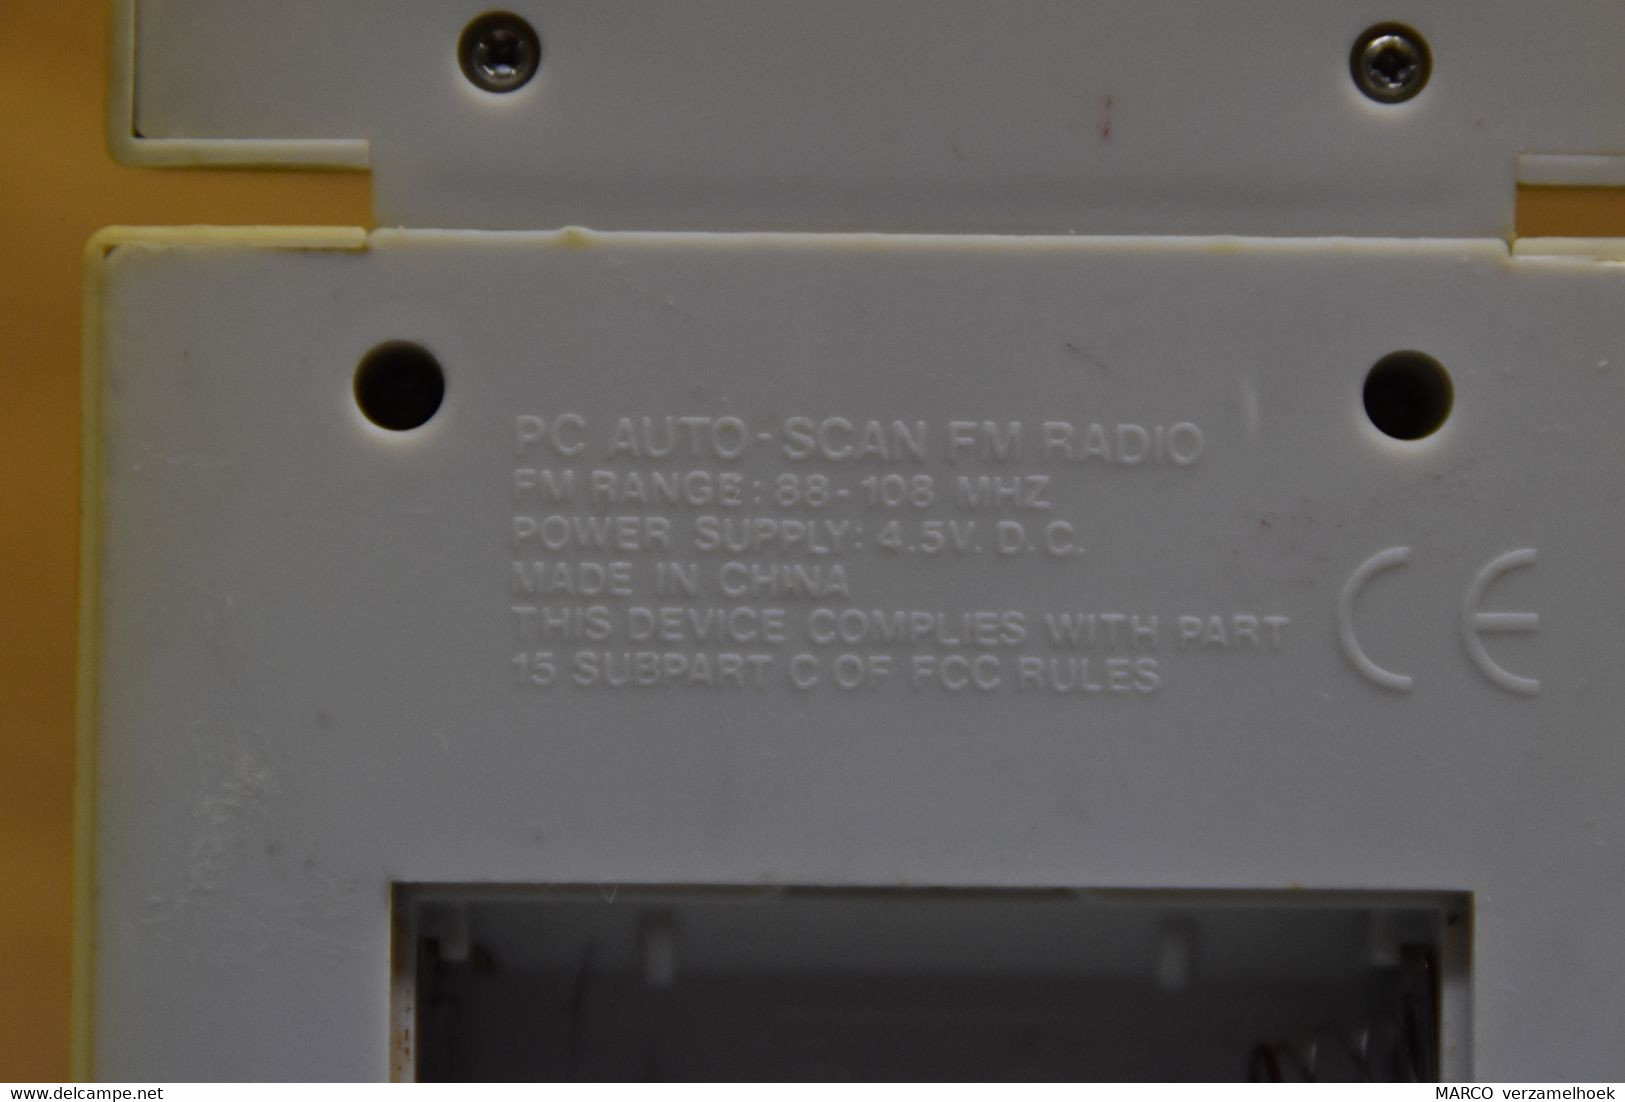 Computer RADIO PC FM Auto Scan Radio GT-003 radio 88-108 Mhz 1990